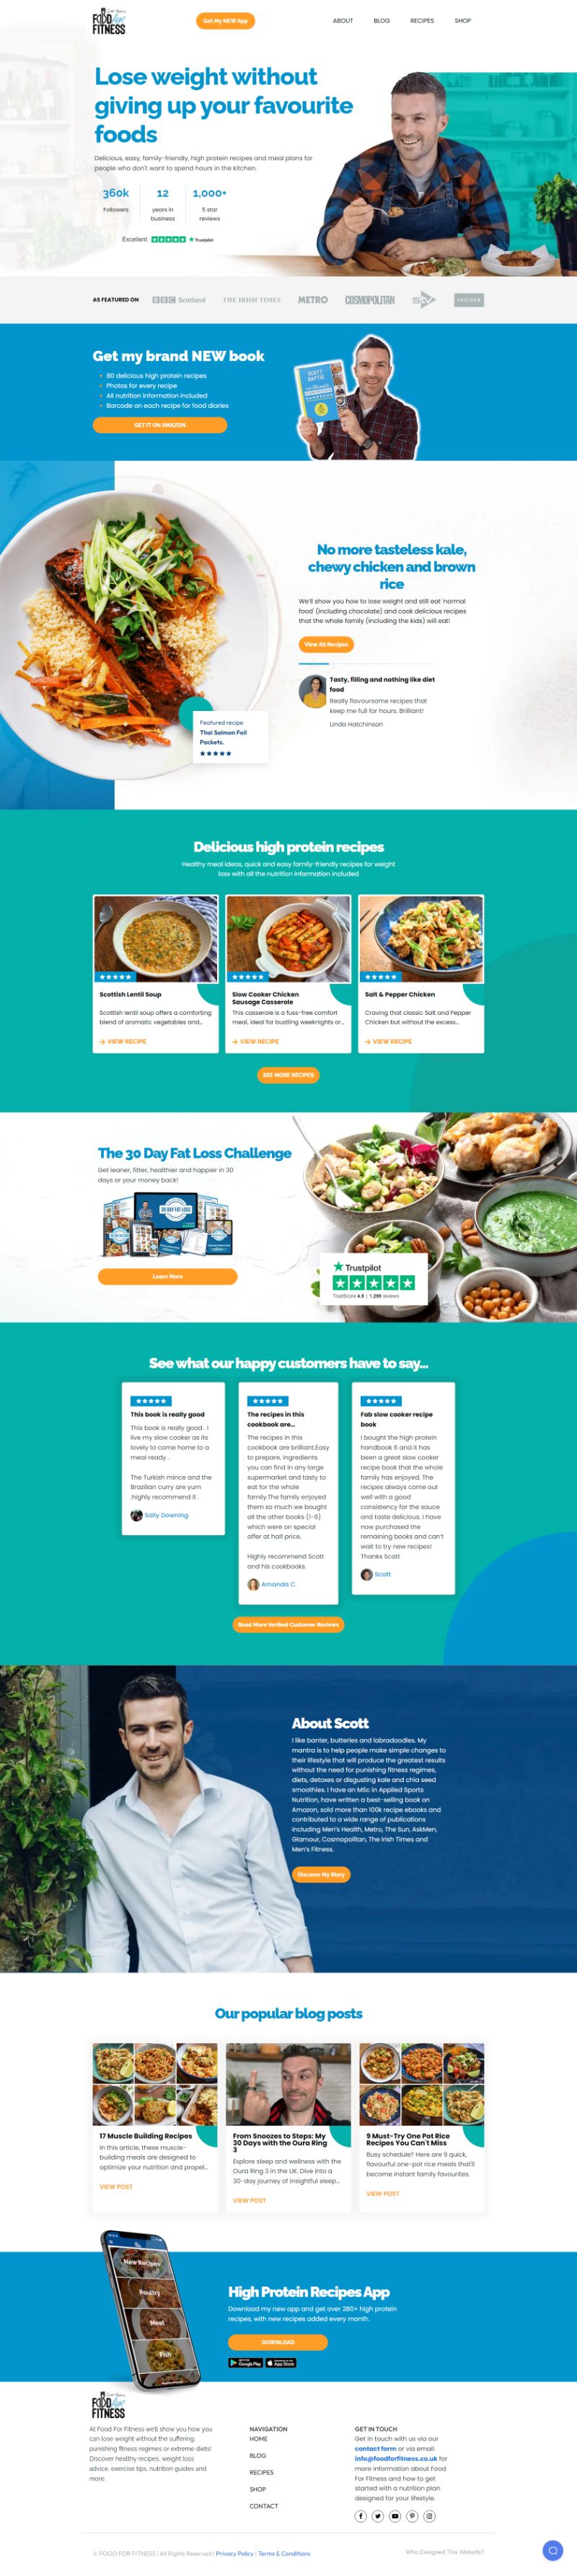 Food For Fitness | Website Design by Studio1